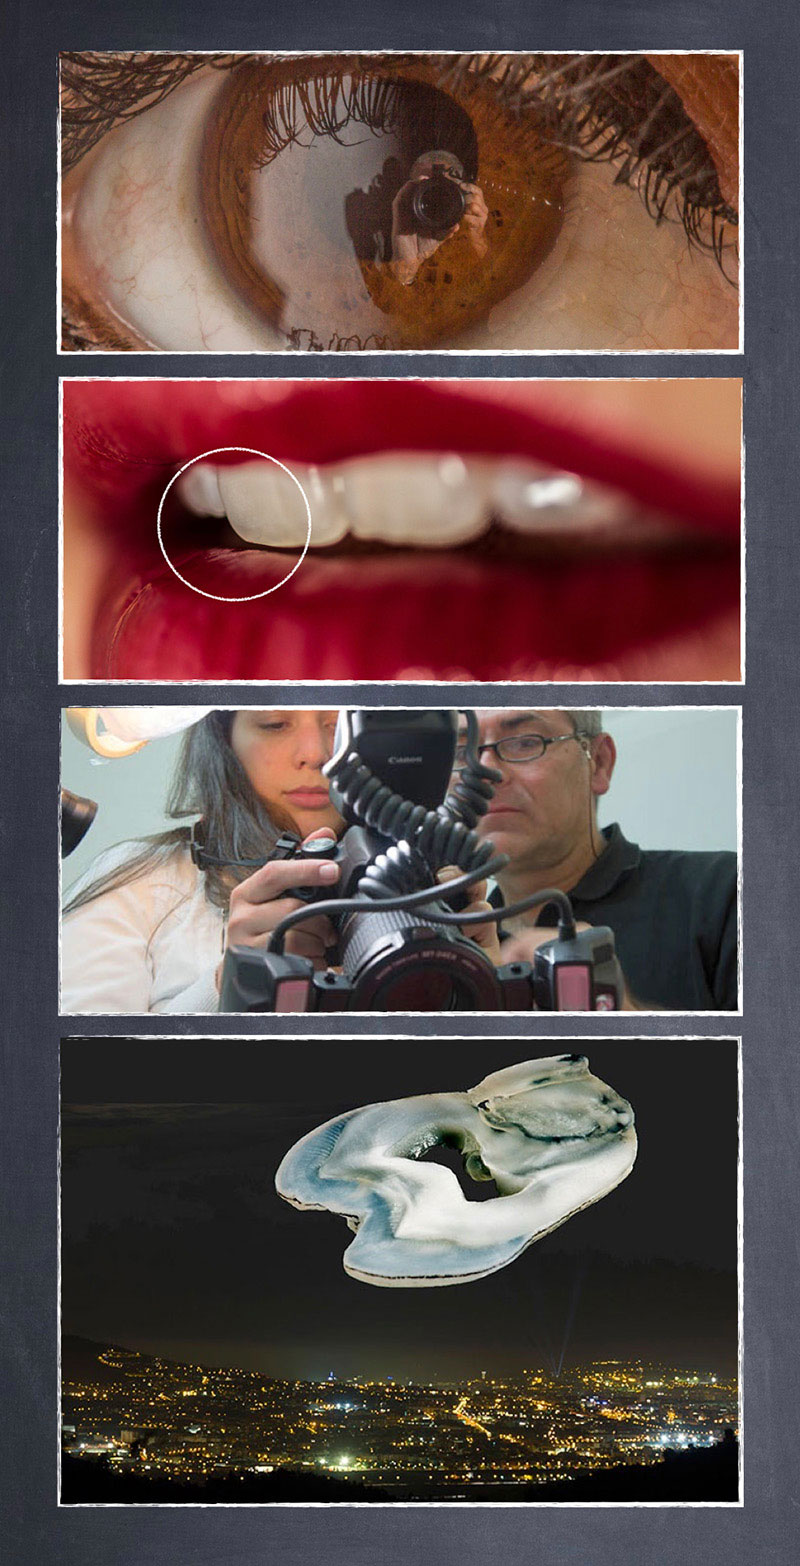 Curs-Foto-Dental-BCN-2018-02VertWeb.jpg